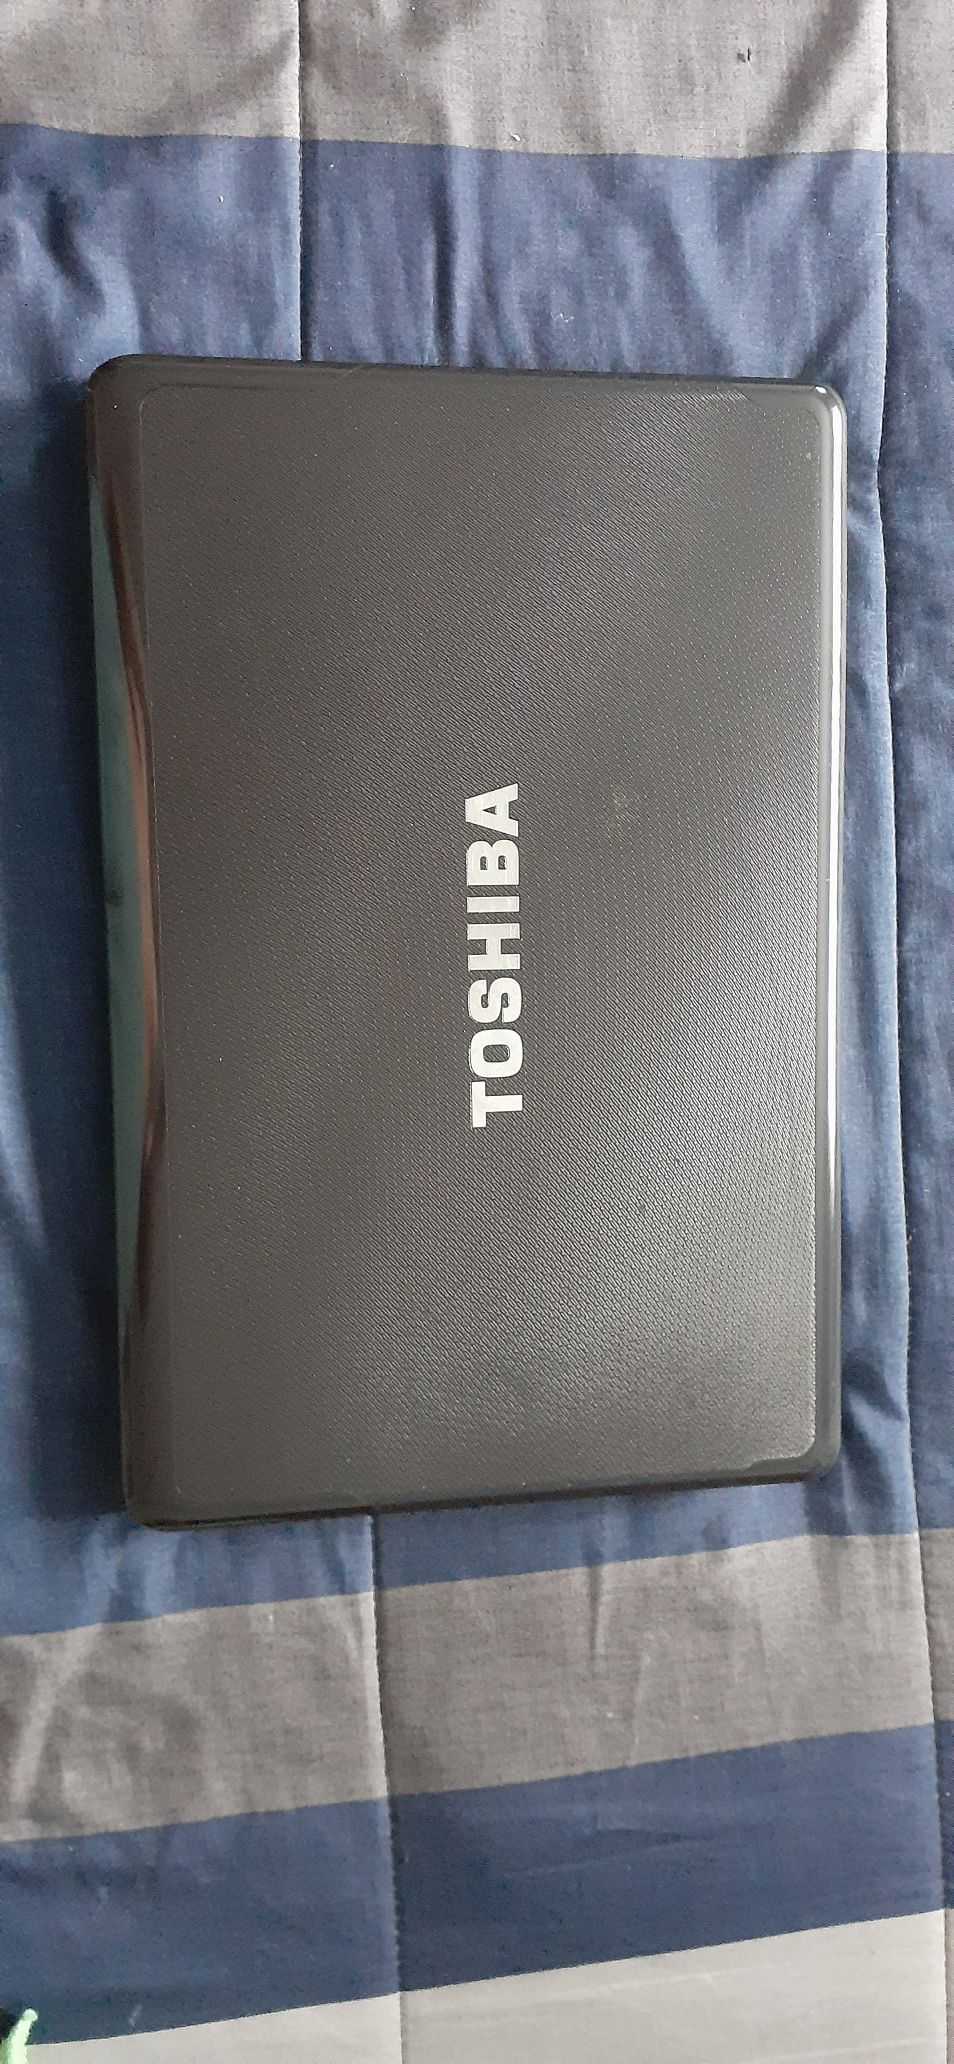 Toshiba a665 laptop